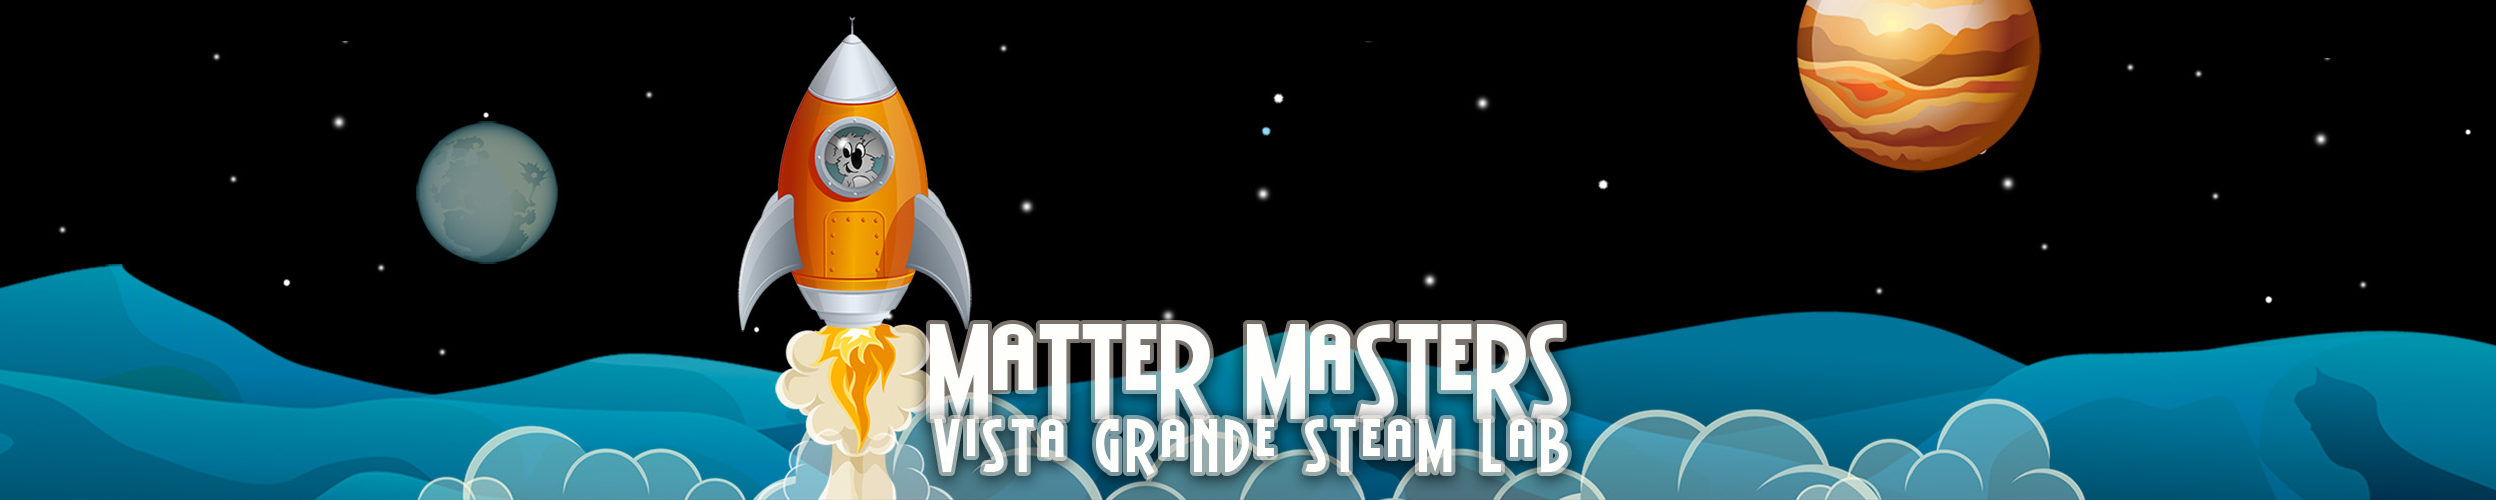 MatterMasters